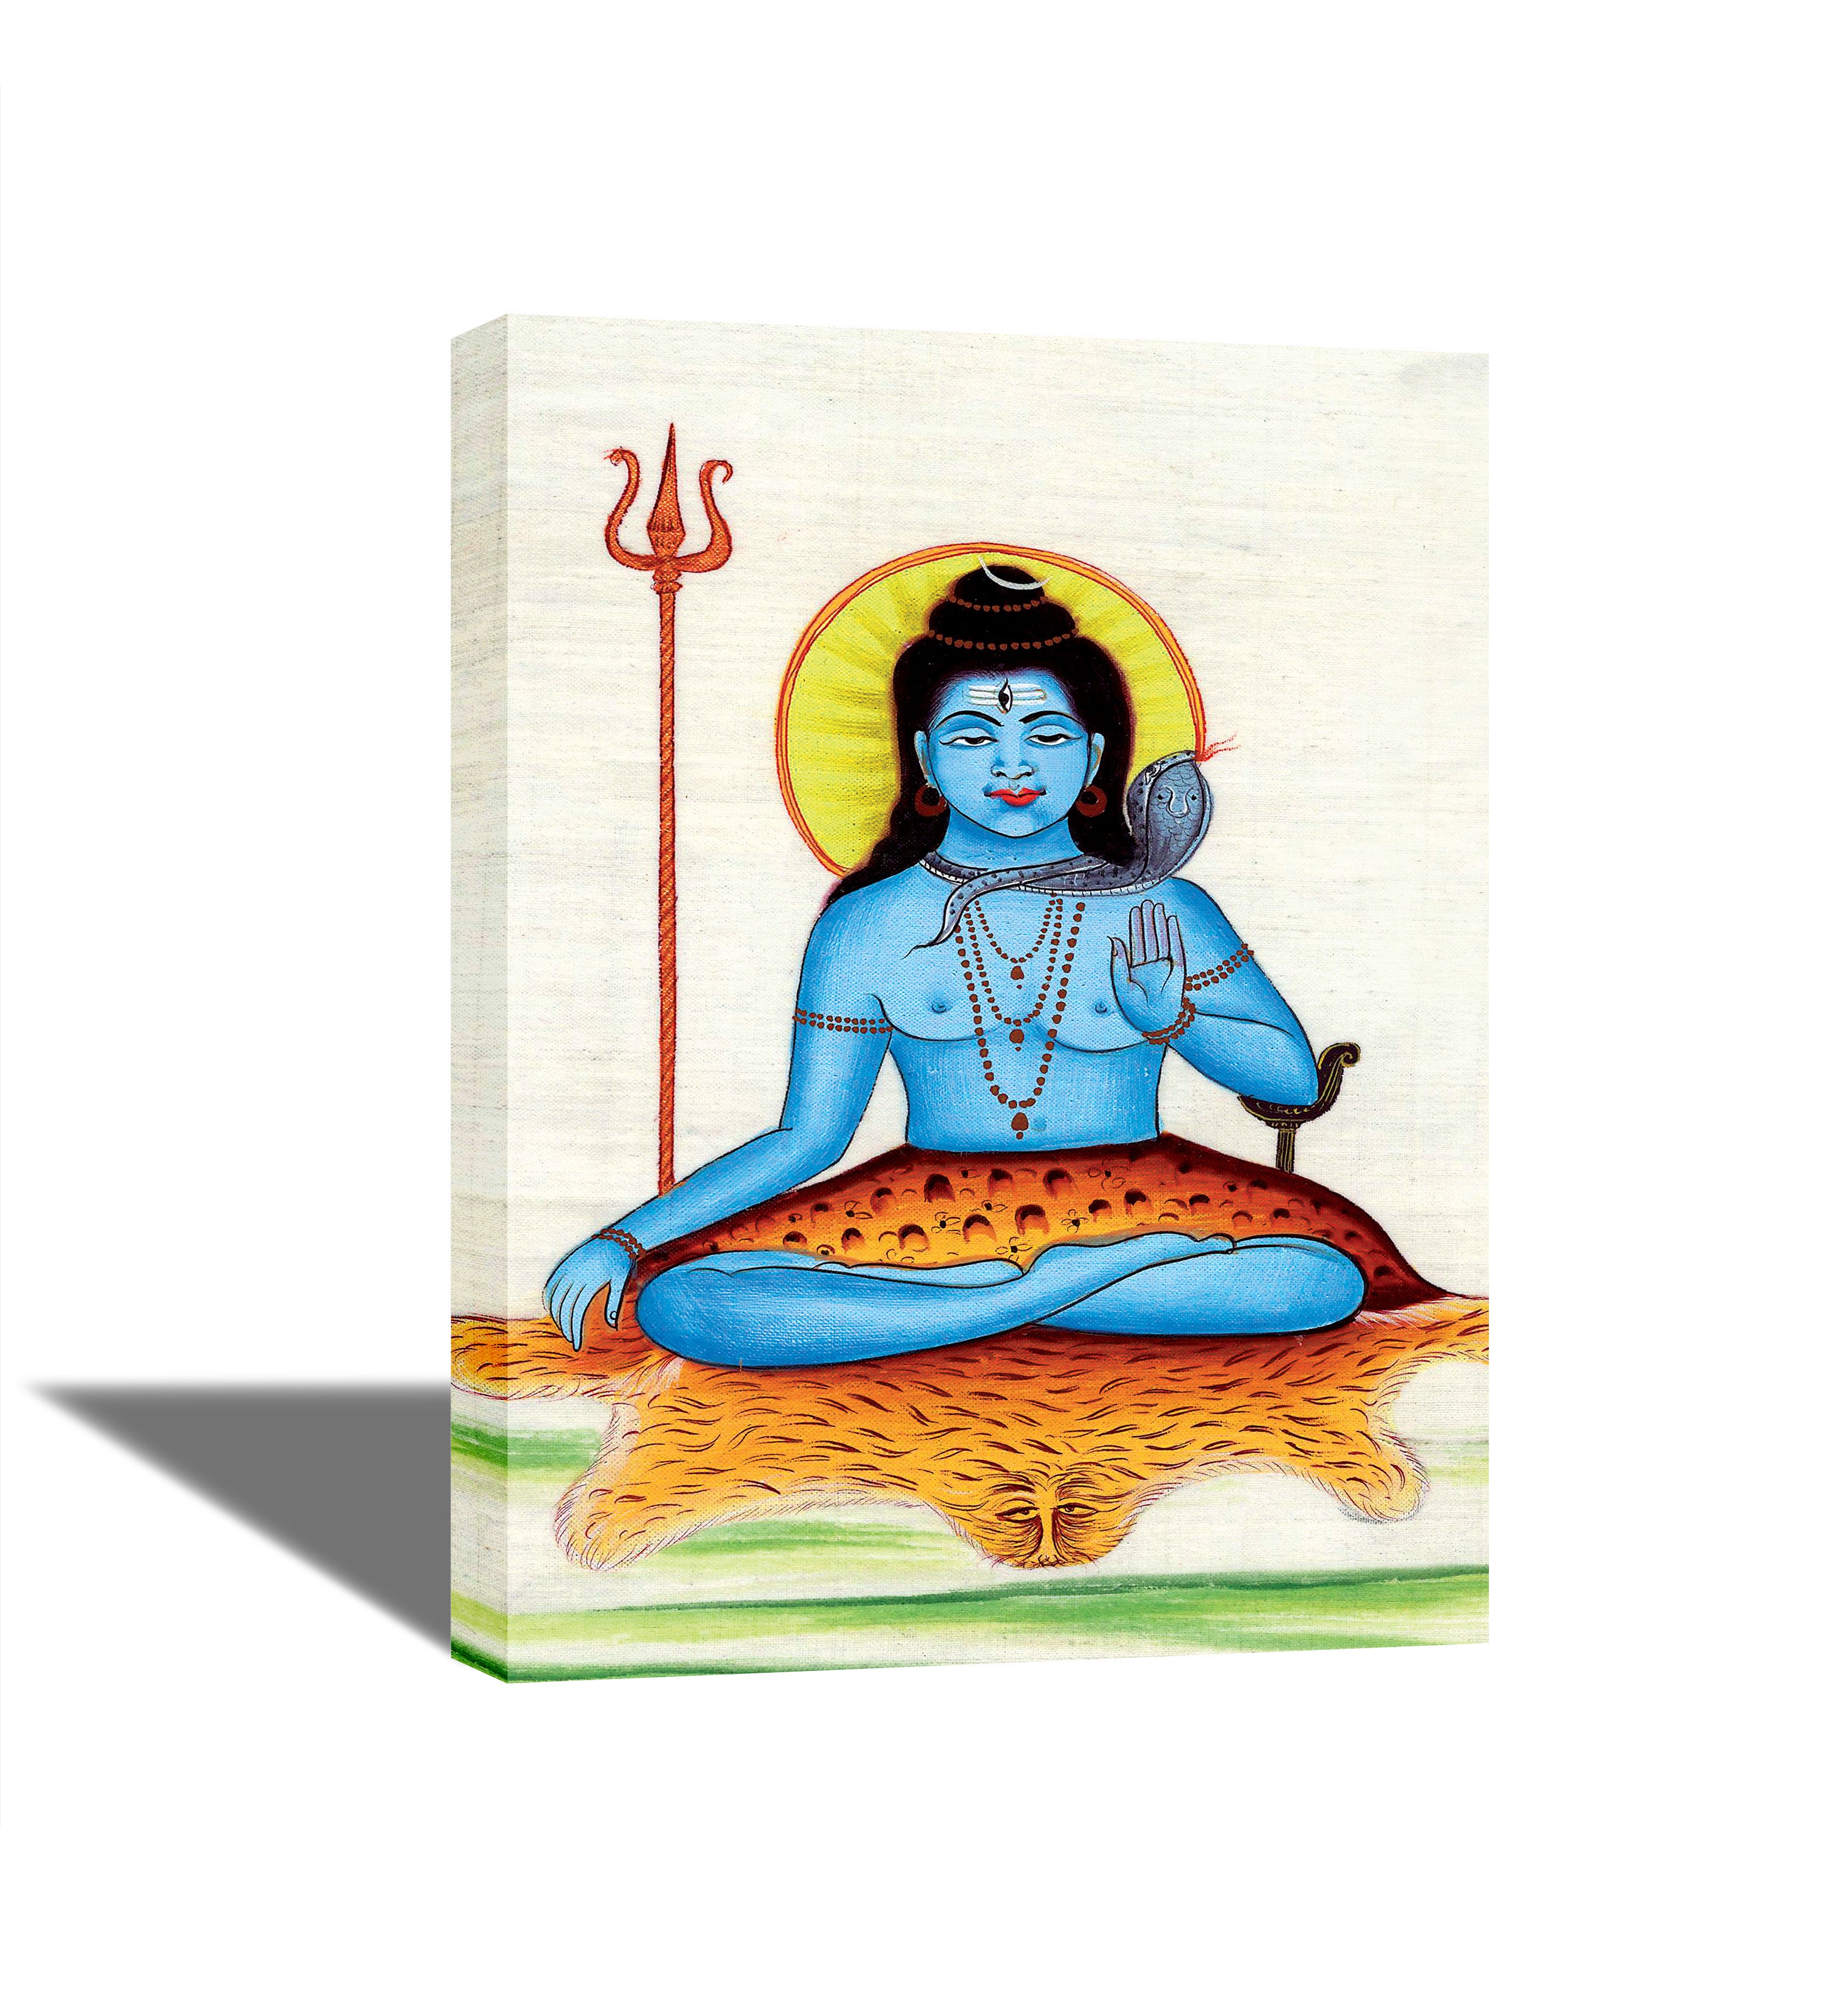 Sadashiva Eternal God, Lord Shiva